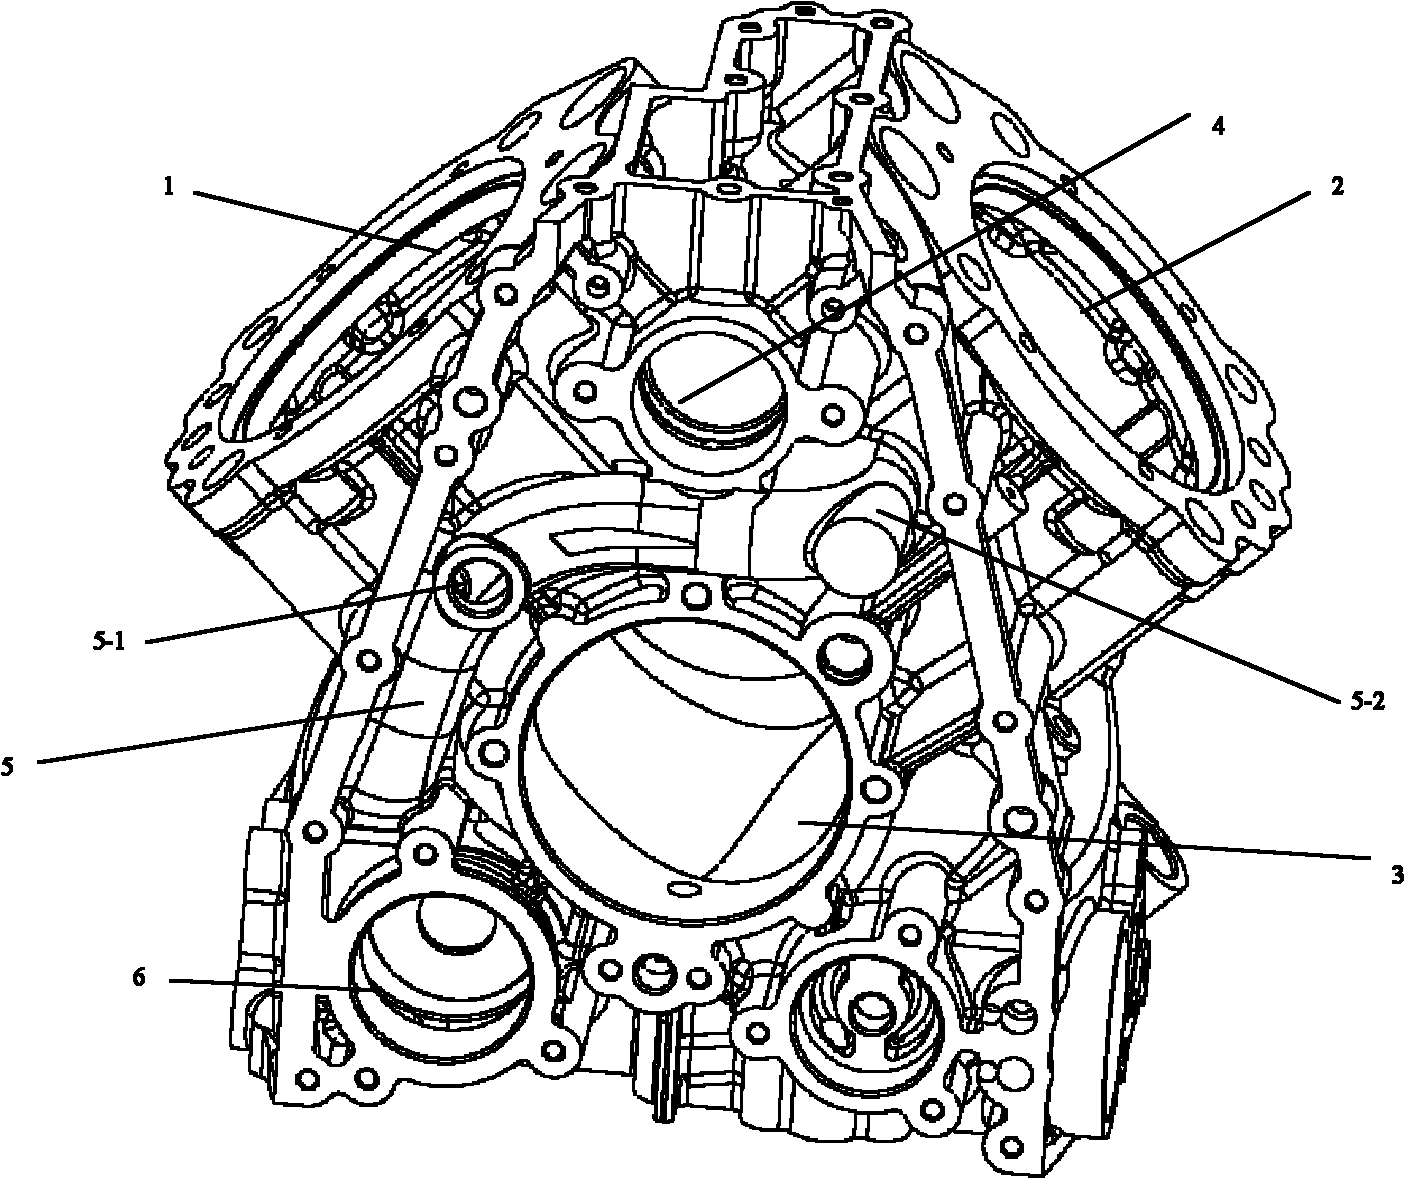 V-shaped crank circular slider internal combustion engine body and internal combustion engine applying same